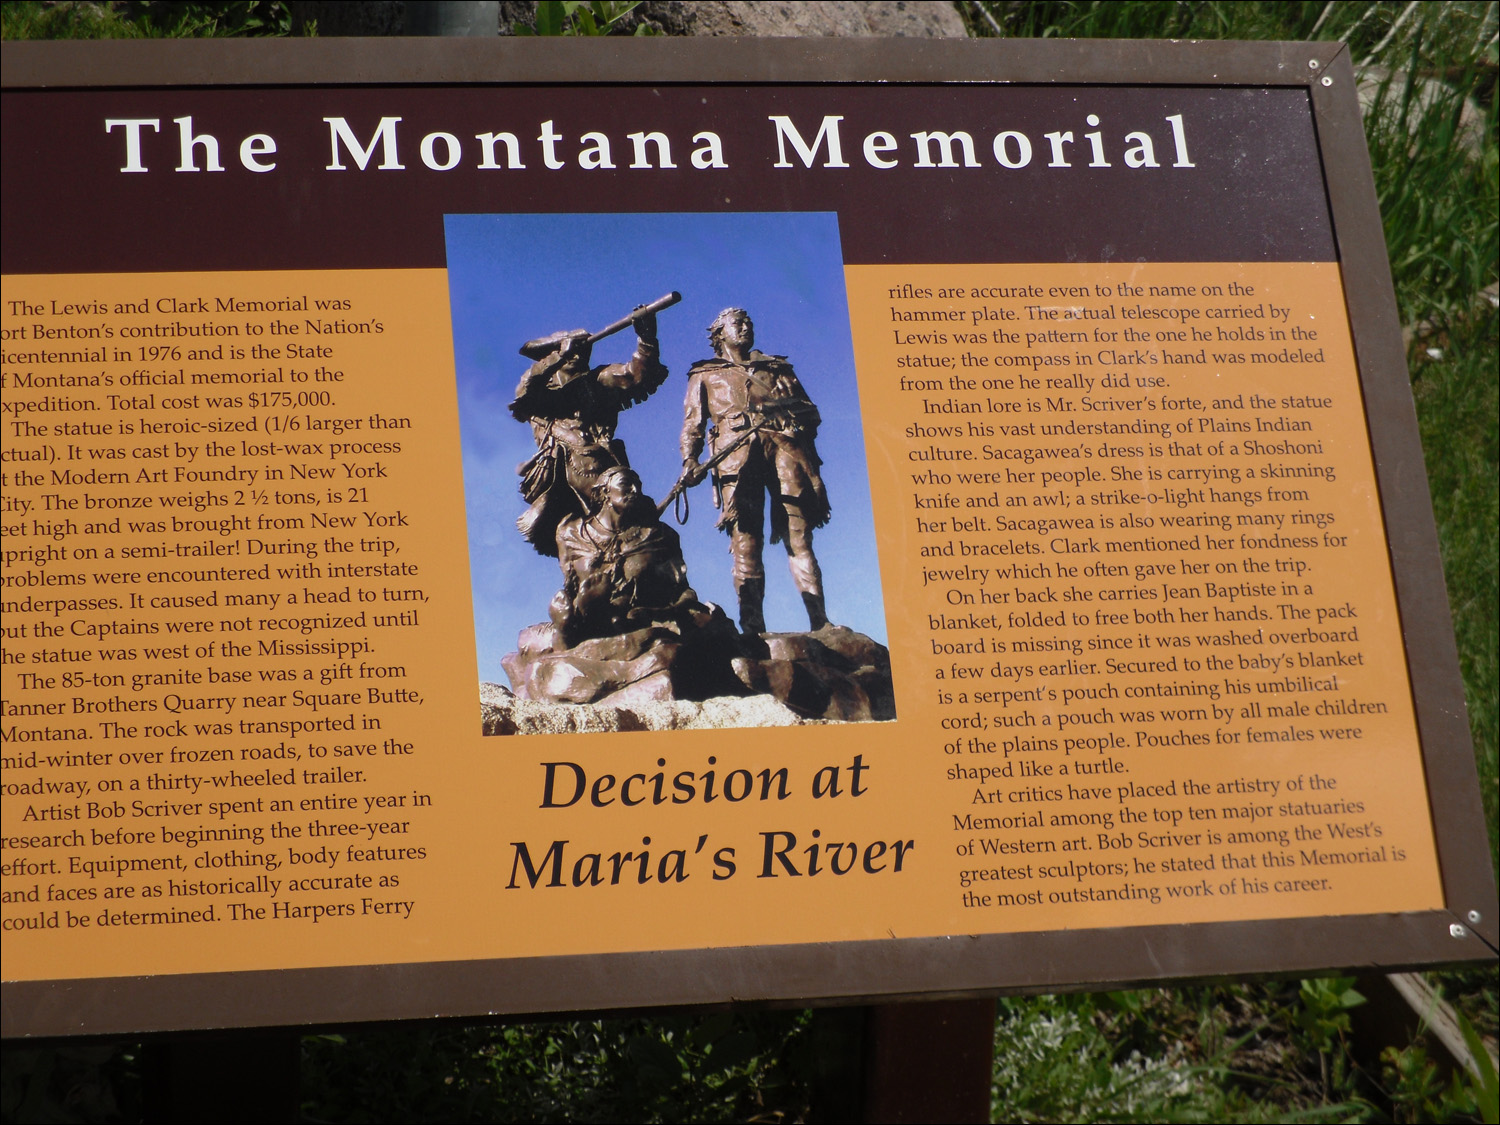 Fort Benton, MT- The Montana Memorial of Lewis and Clark with Sacagawea